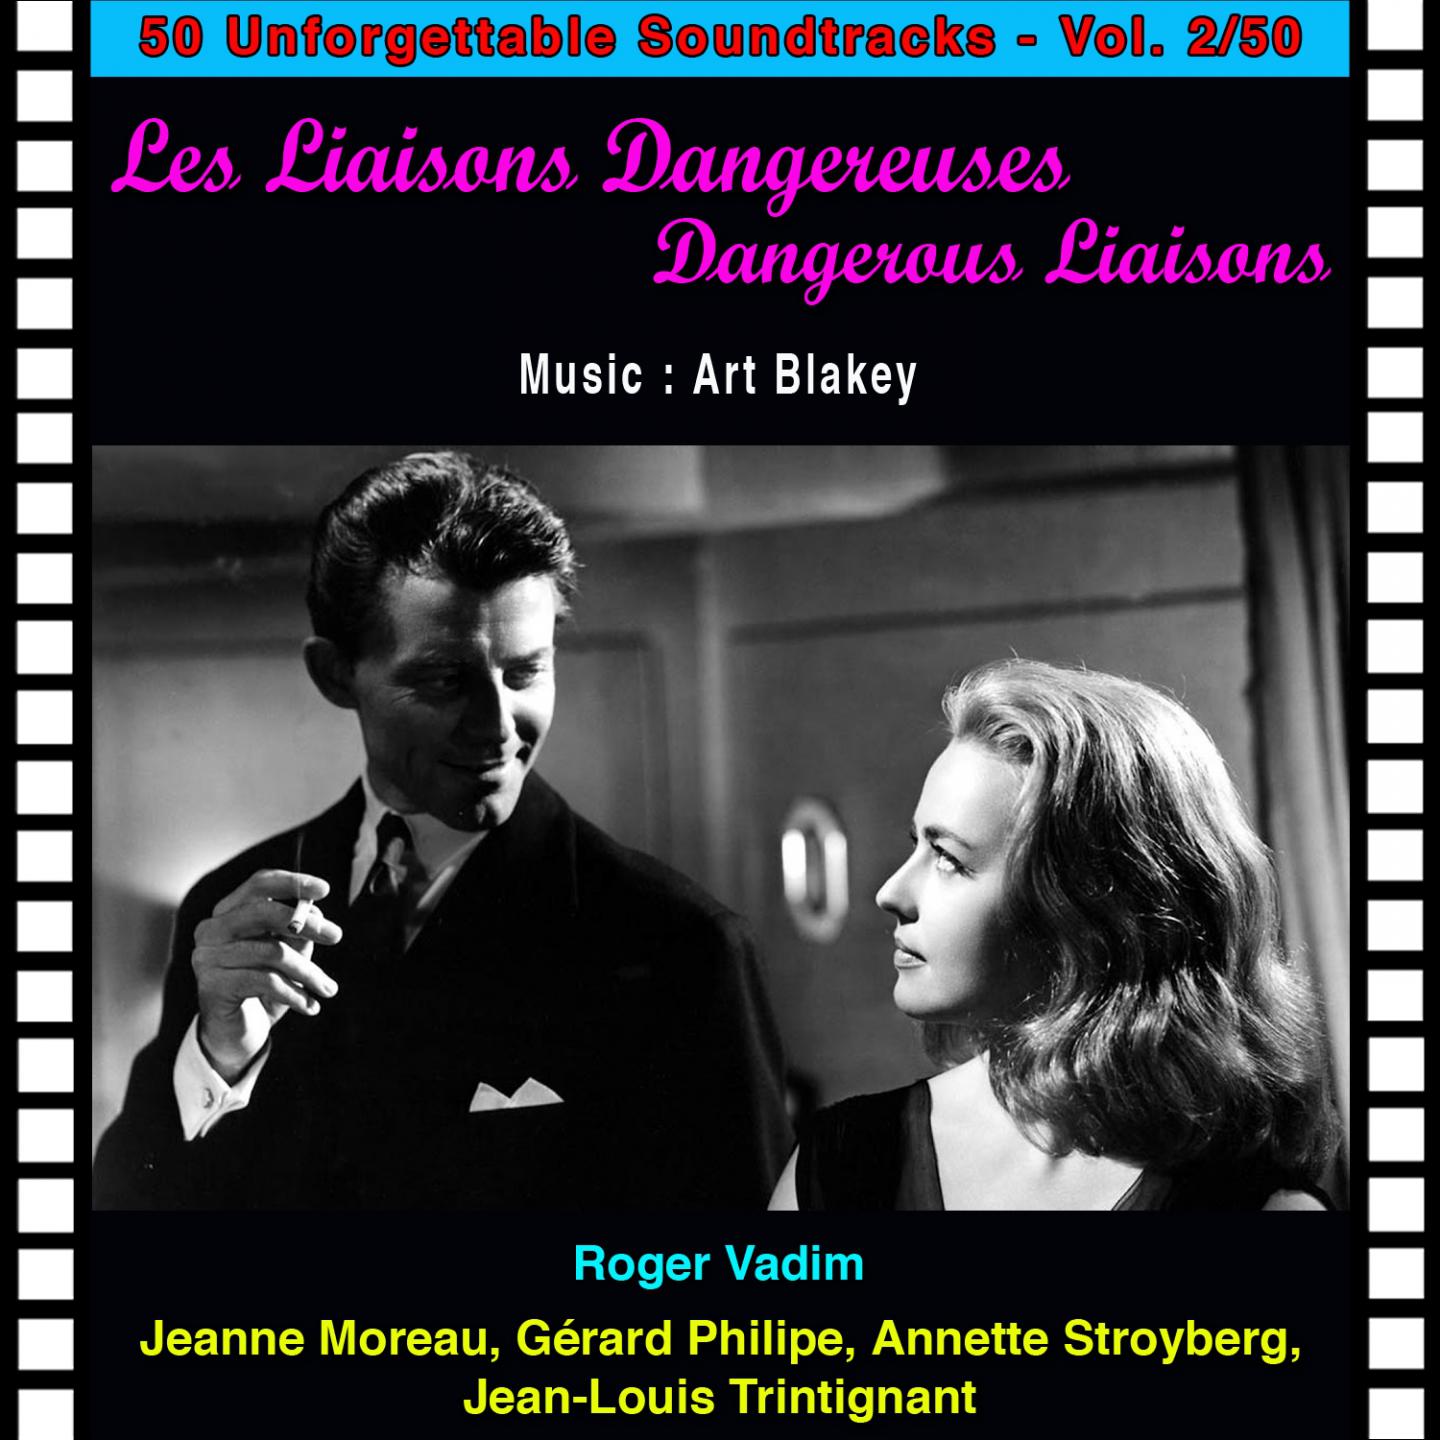 The feeling of love (Les liaisons dangereuses - dangerous liaisons)